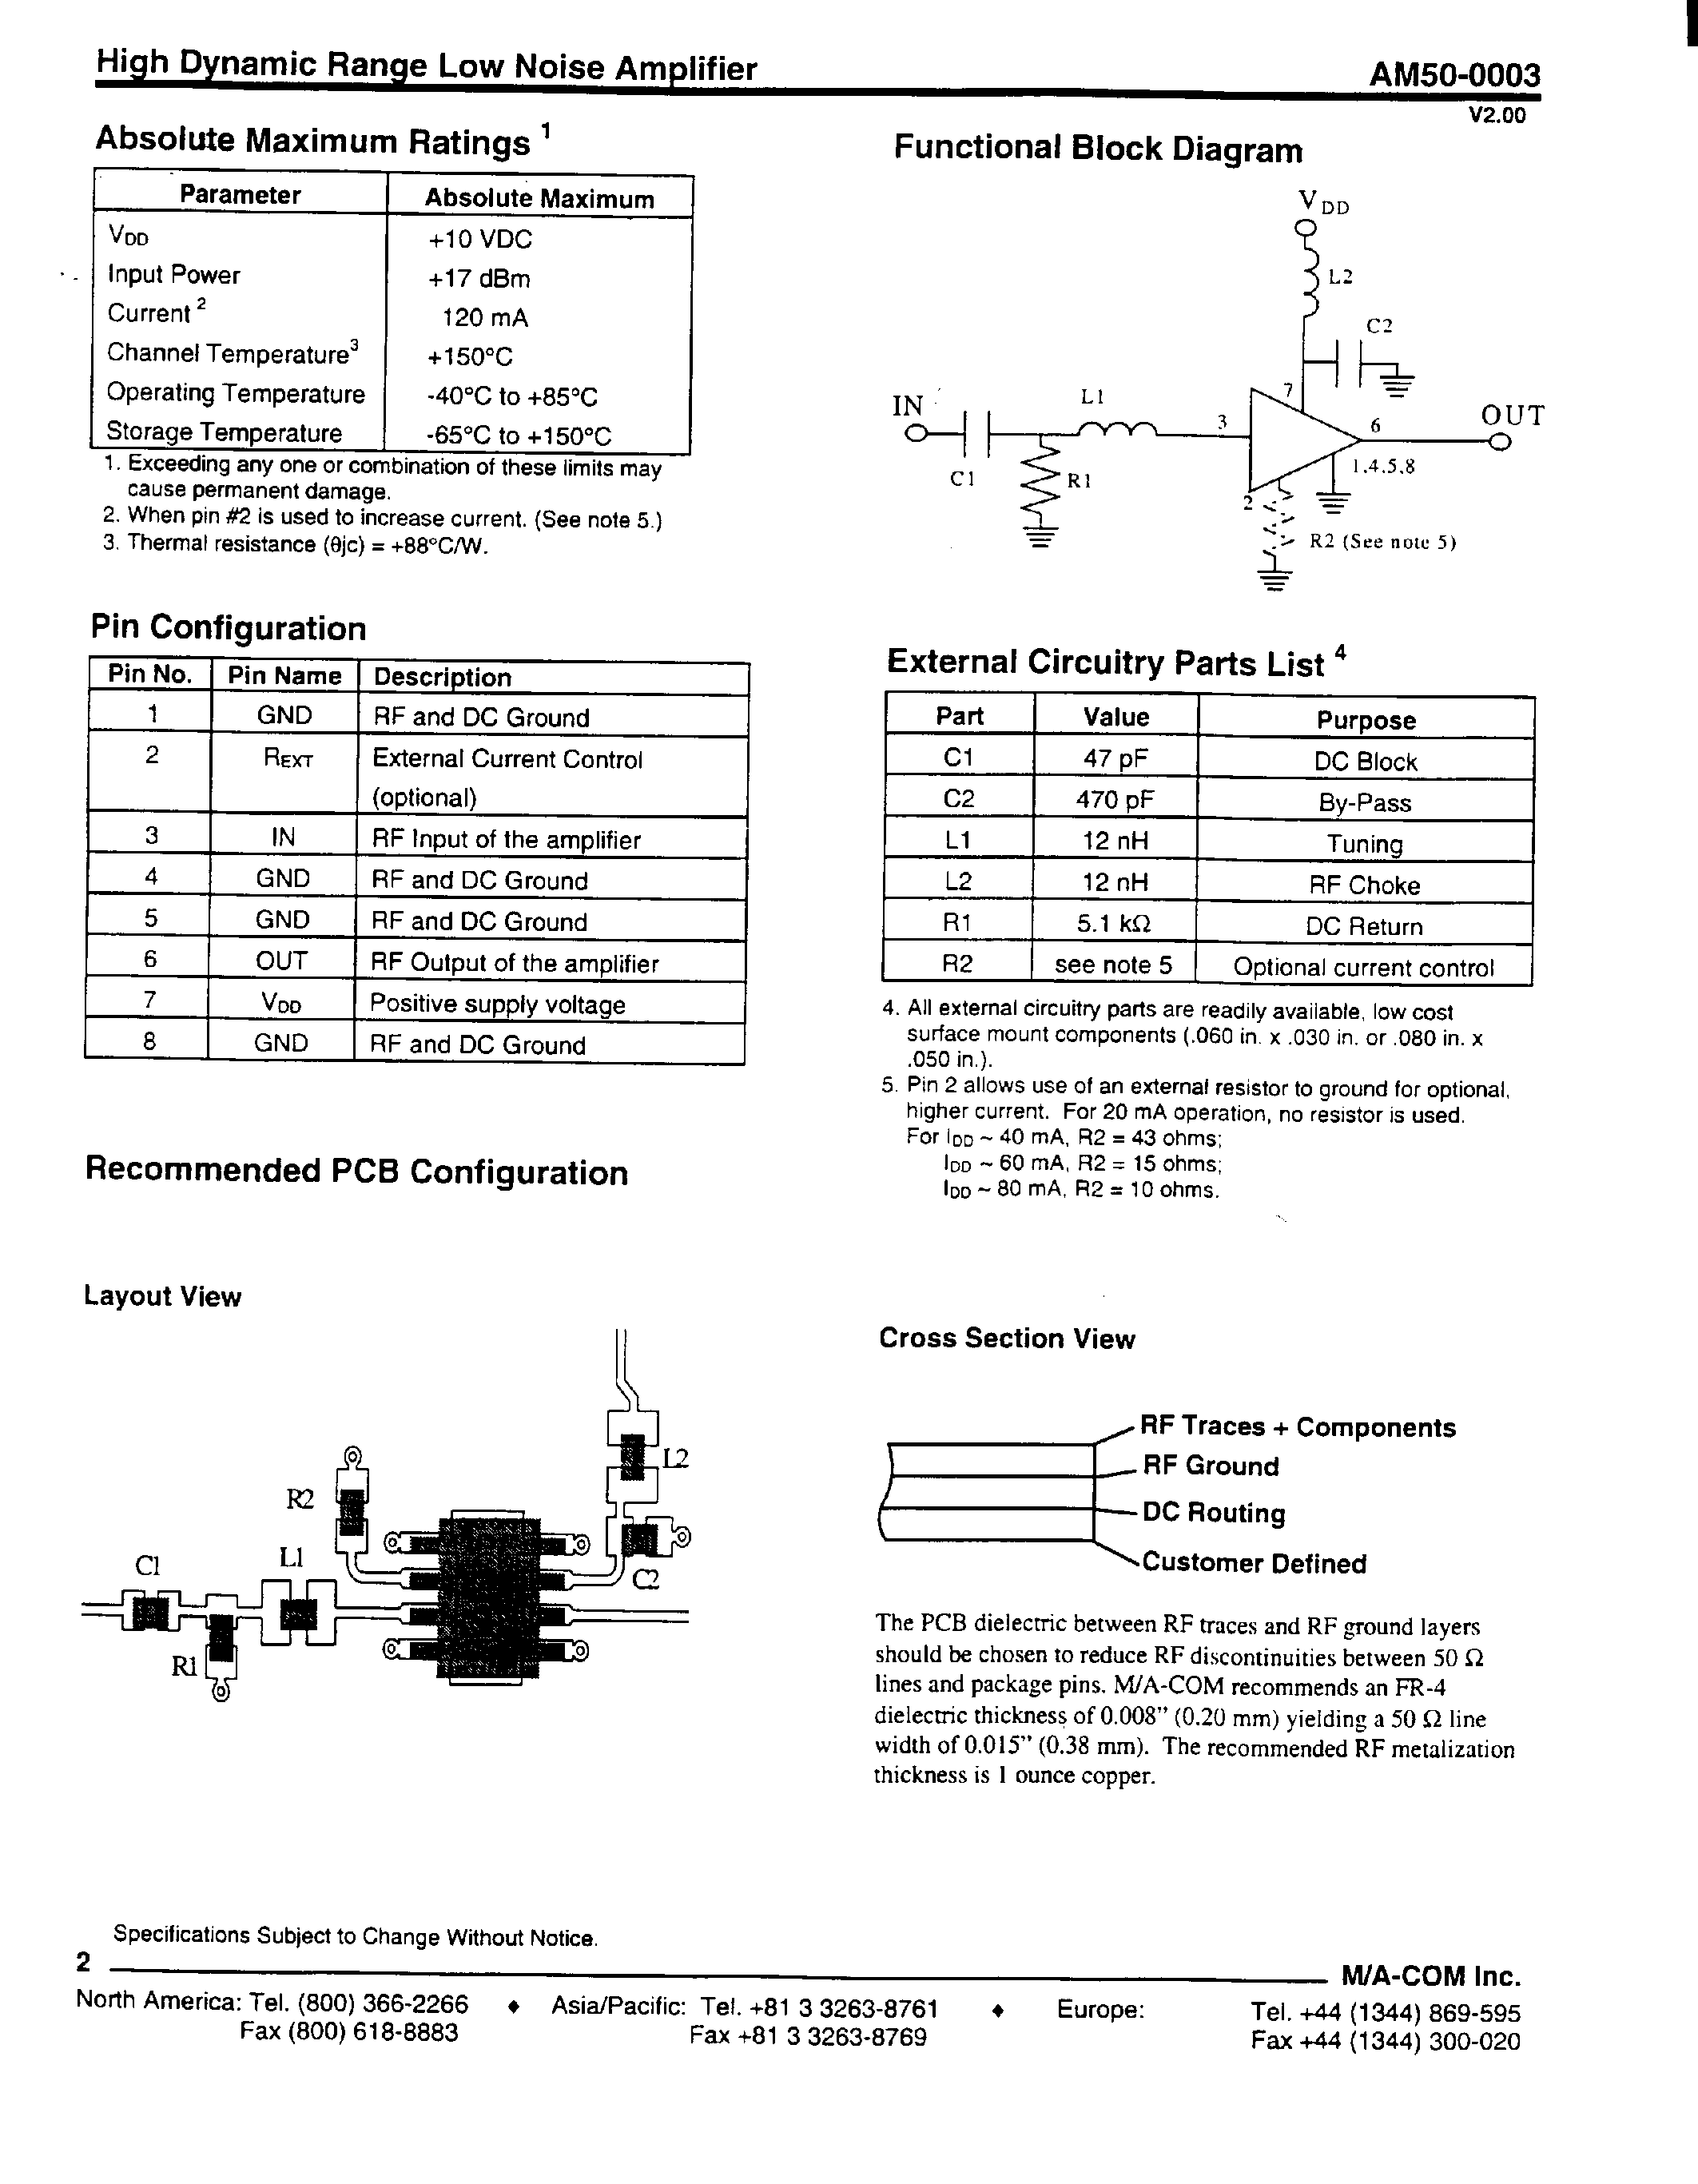 Datasheet AM50-0003SMB - High Dynamic Range Low Noise Amplifier 800-1000 MHz page 2